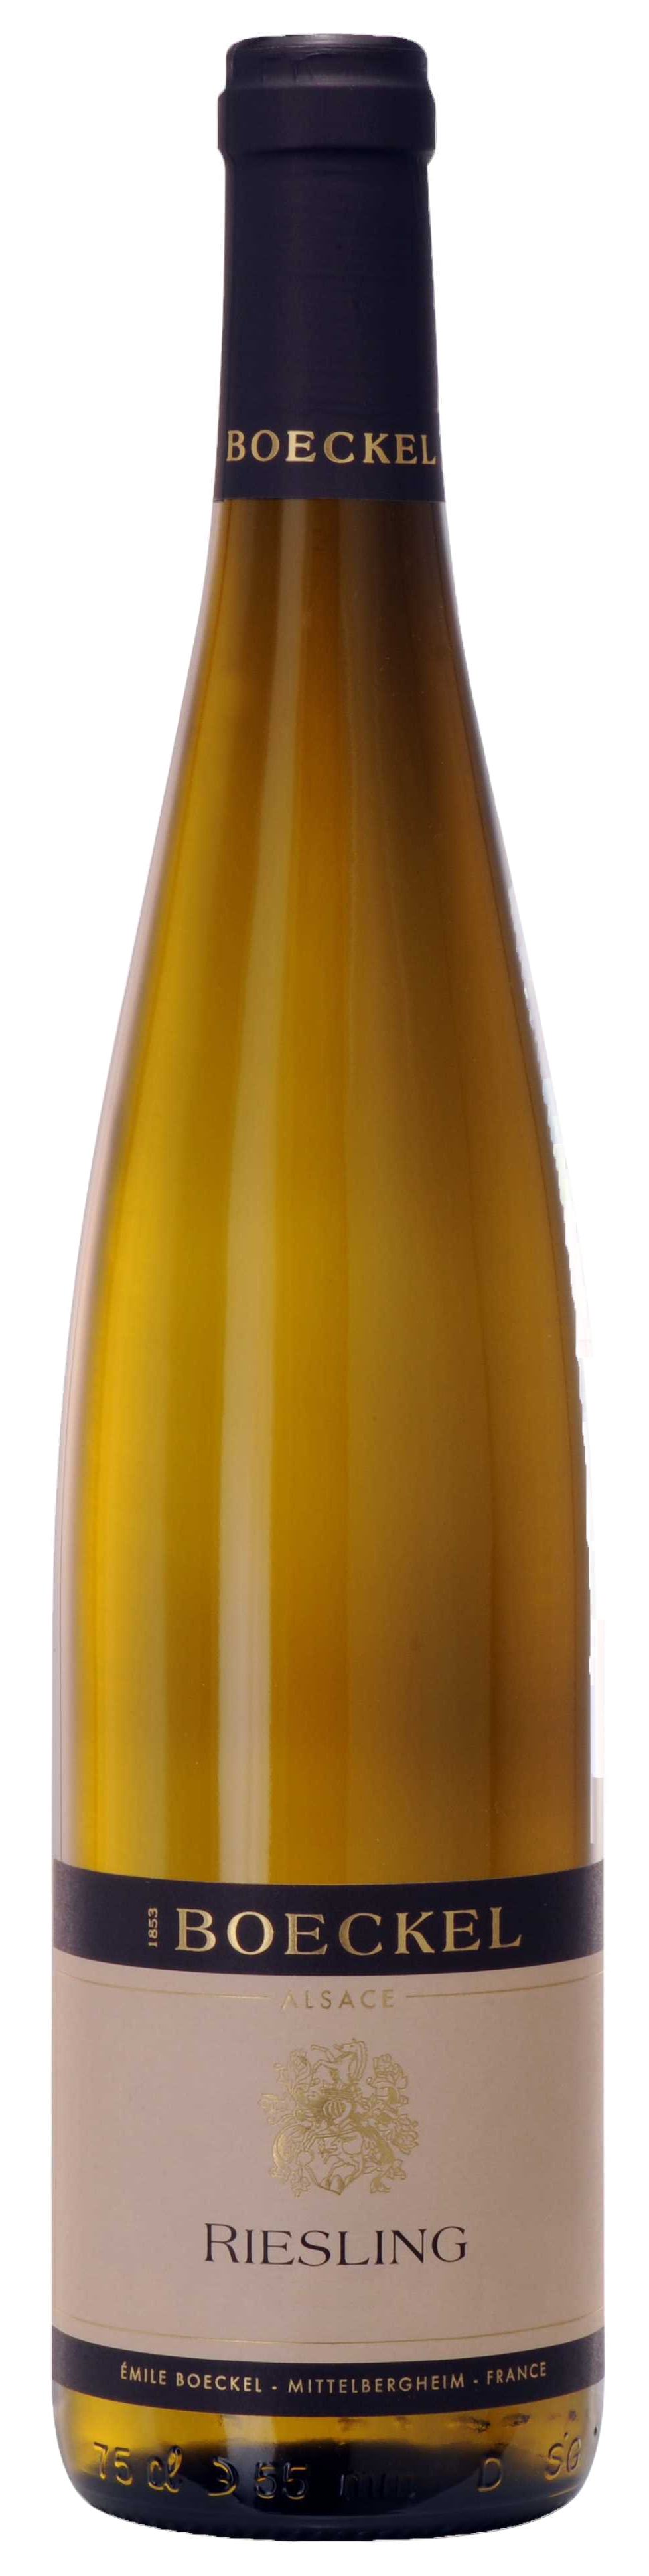 Bottle shot of 2017 Riesling